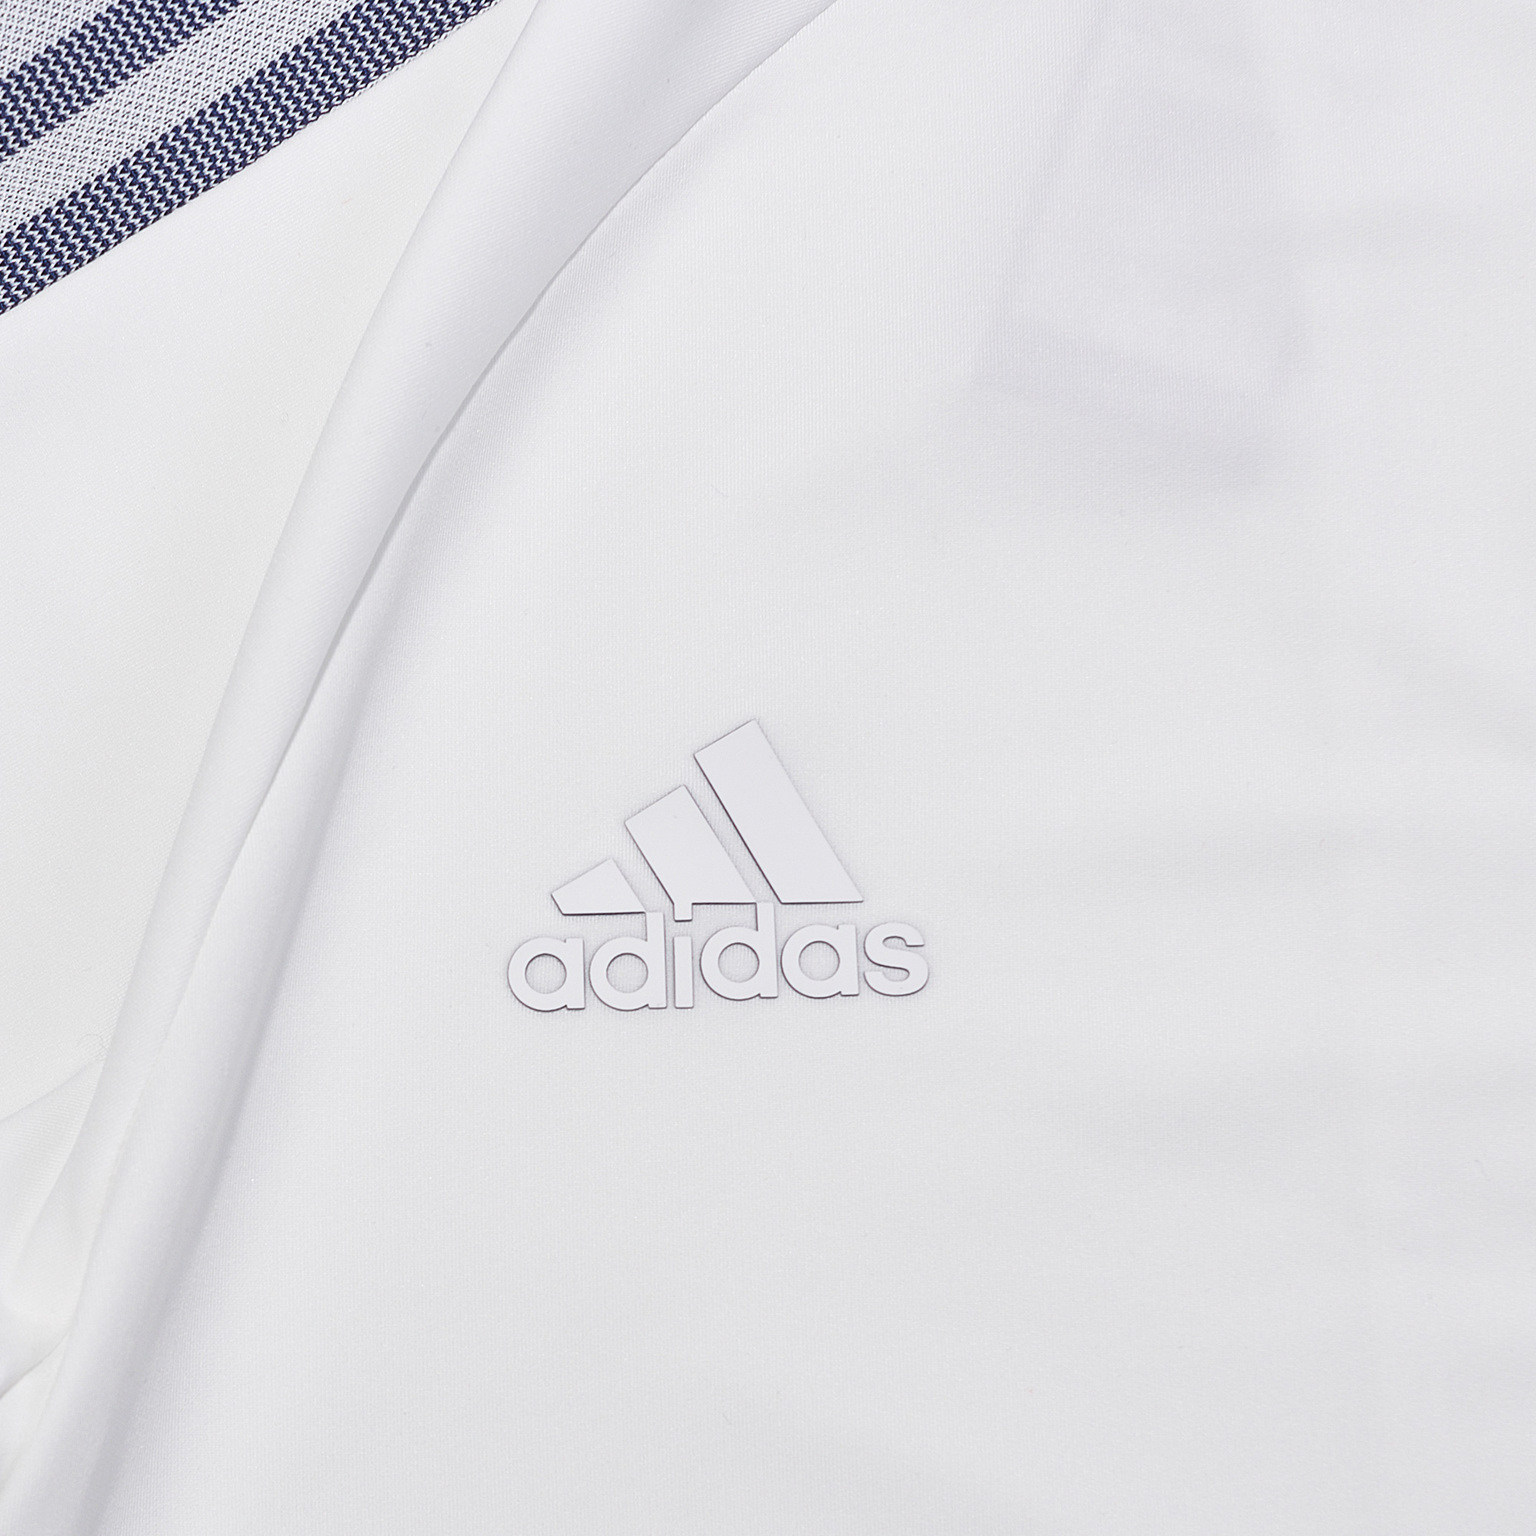 Олимпийка Adidas Real Madrid сезон 2020/21